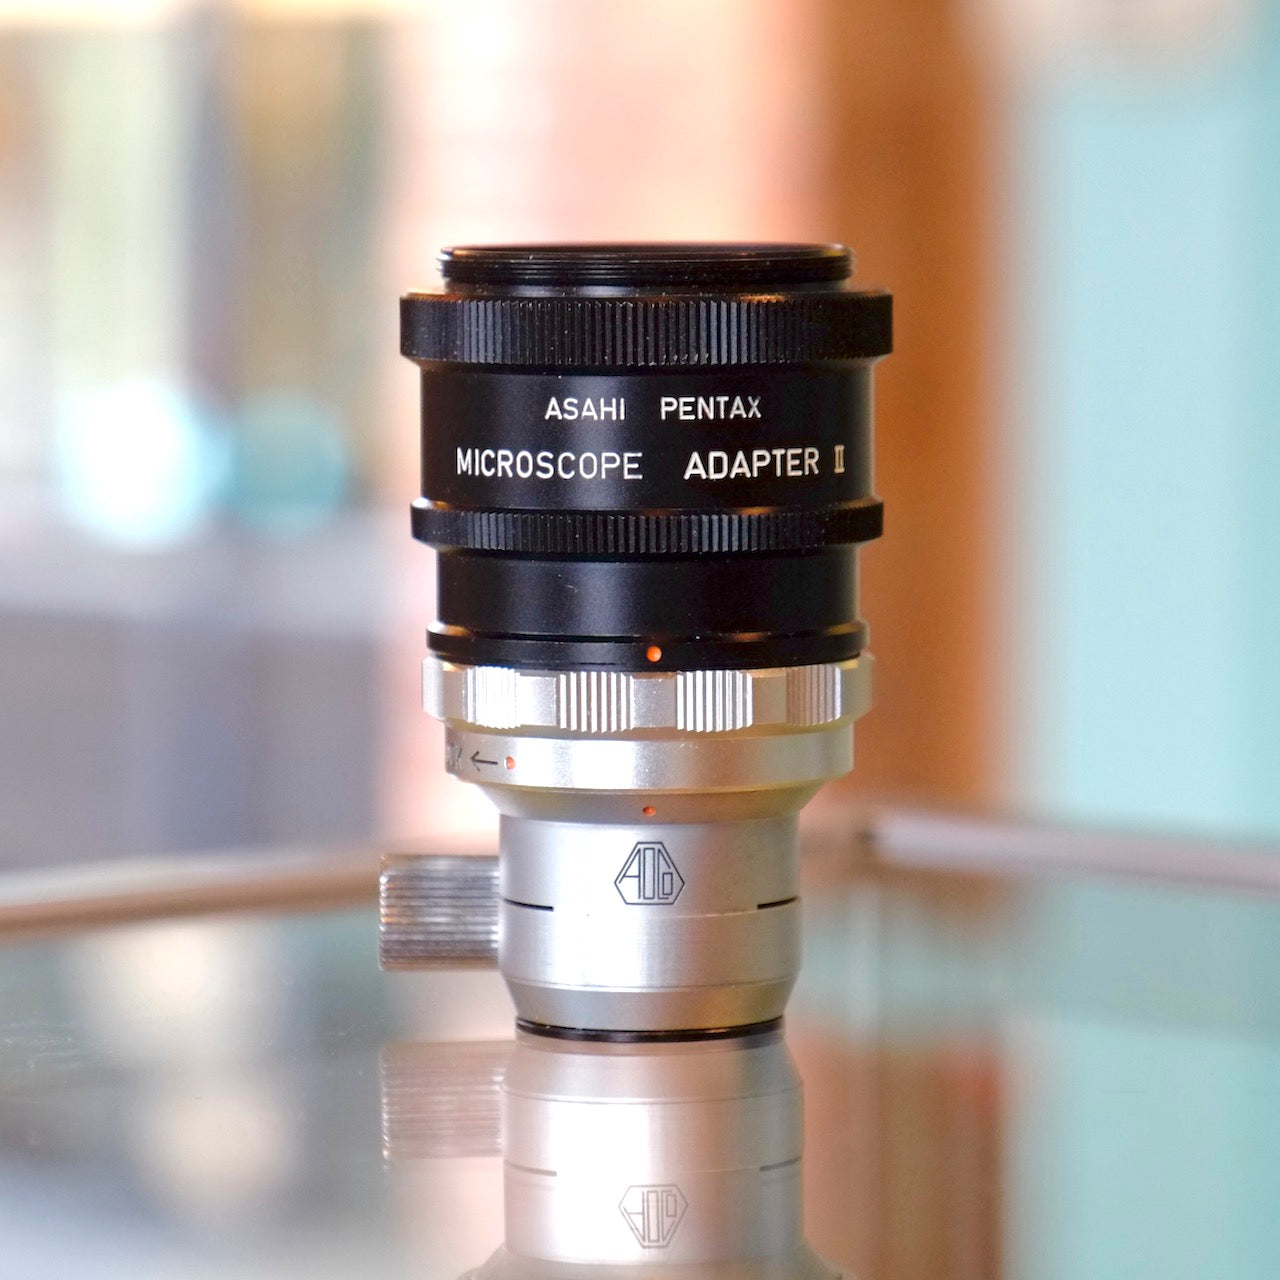 Asahi Pentax Microscope Adapter II